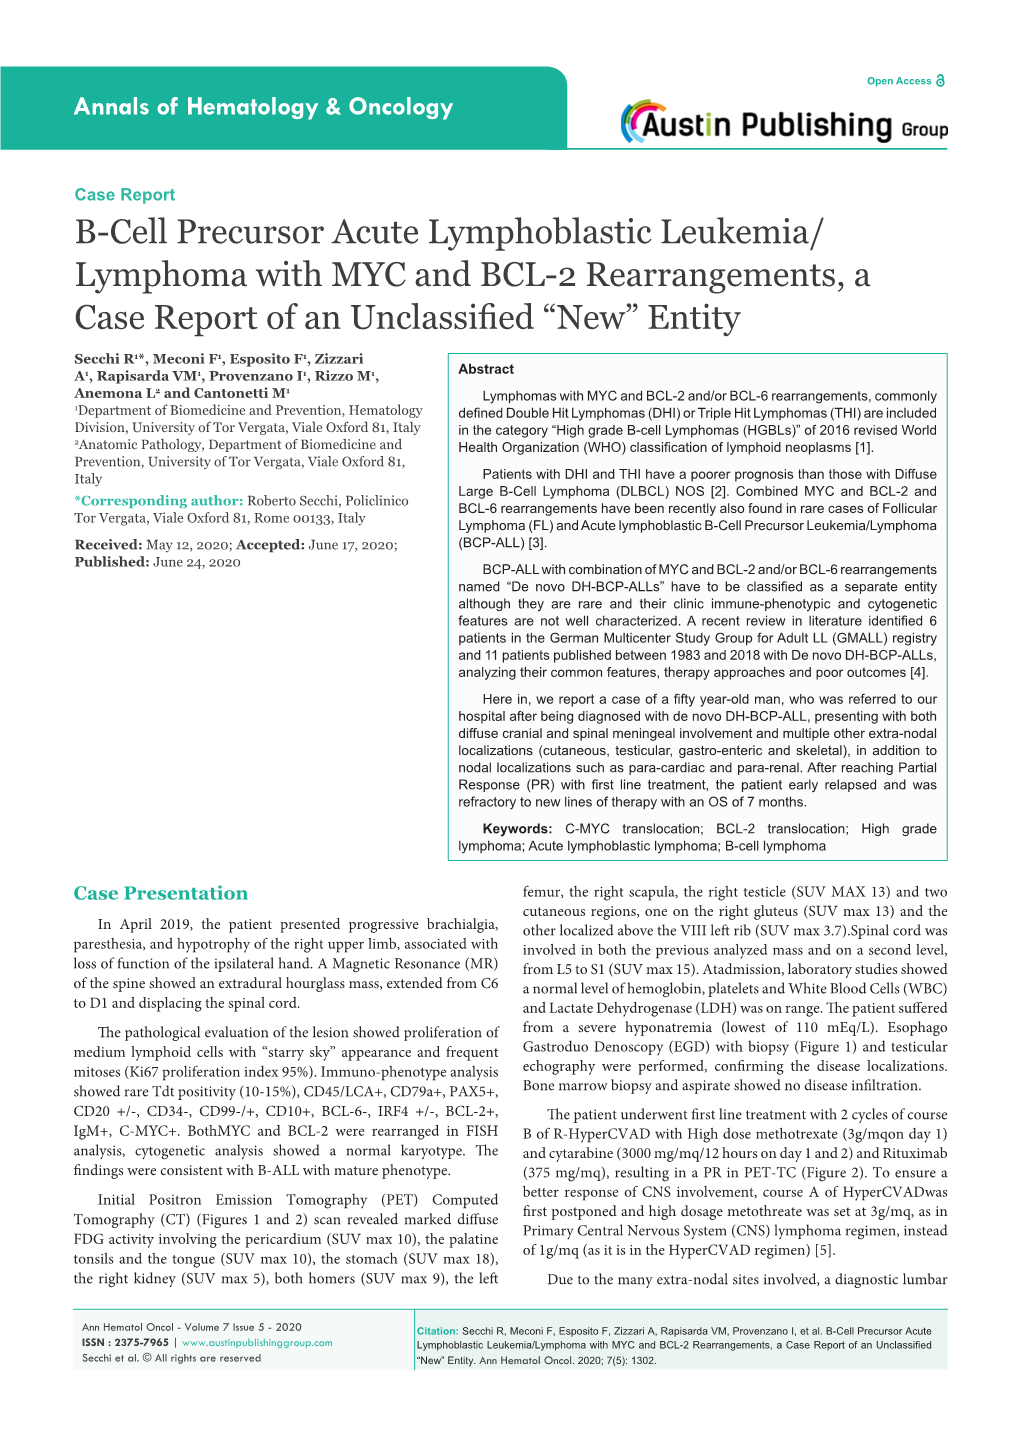 B-Cell Precursor Acute Lymphoblastic Leukemia/Lymphoma with Myc And